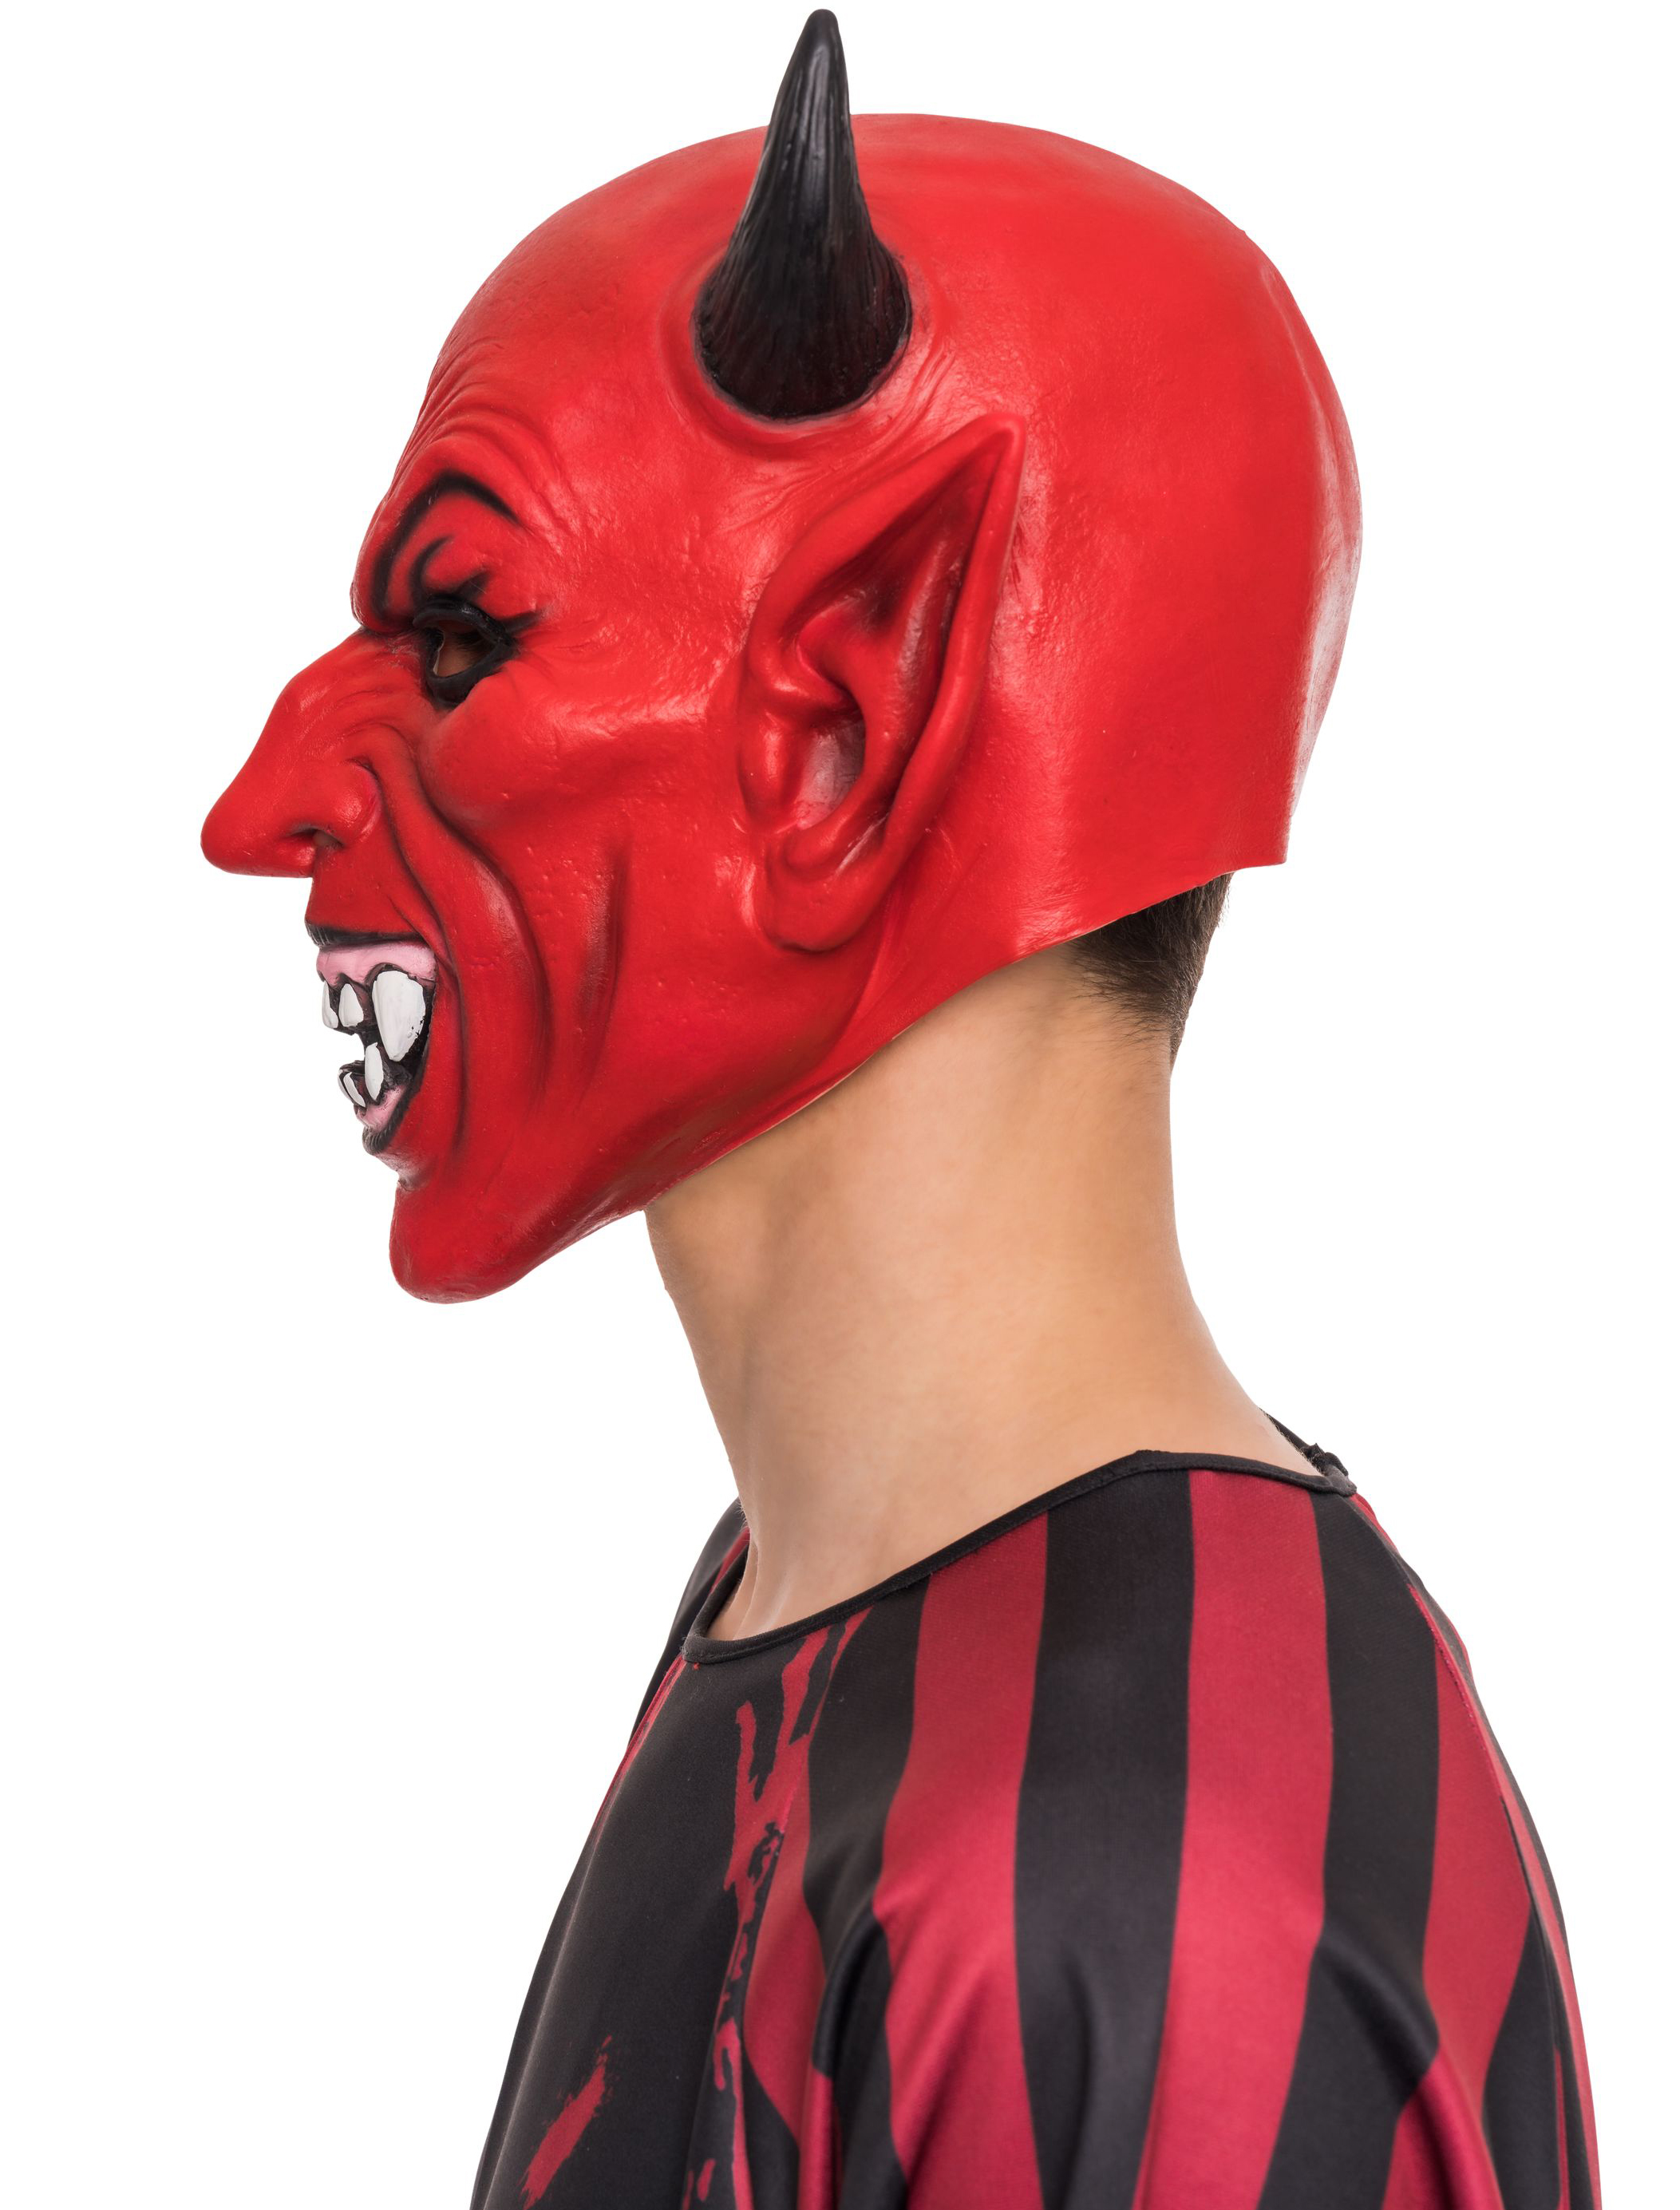 Latexmaske Teufel schwarz/rot